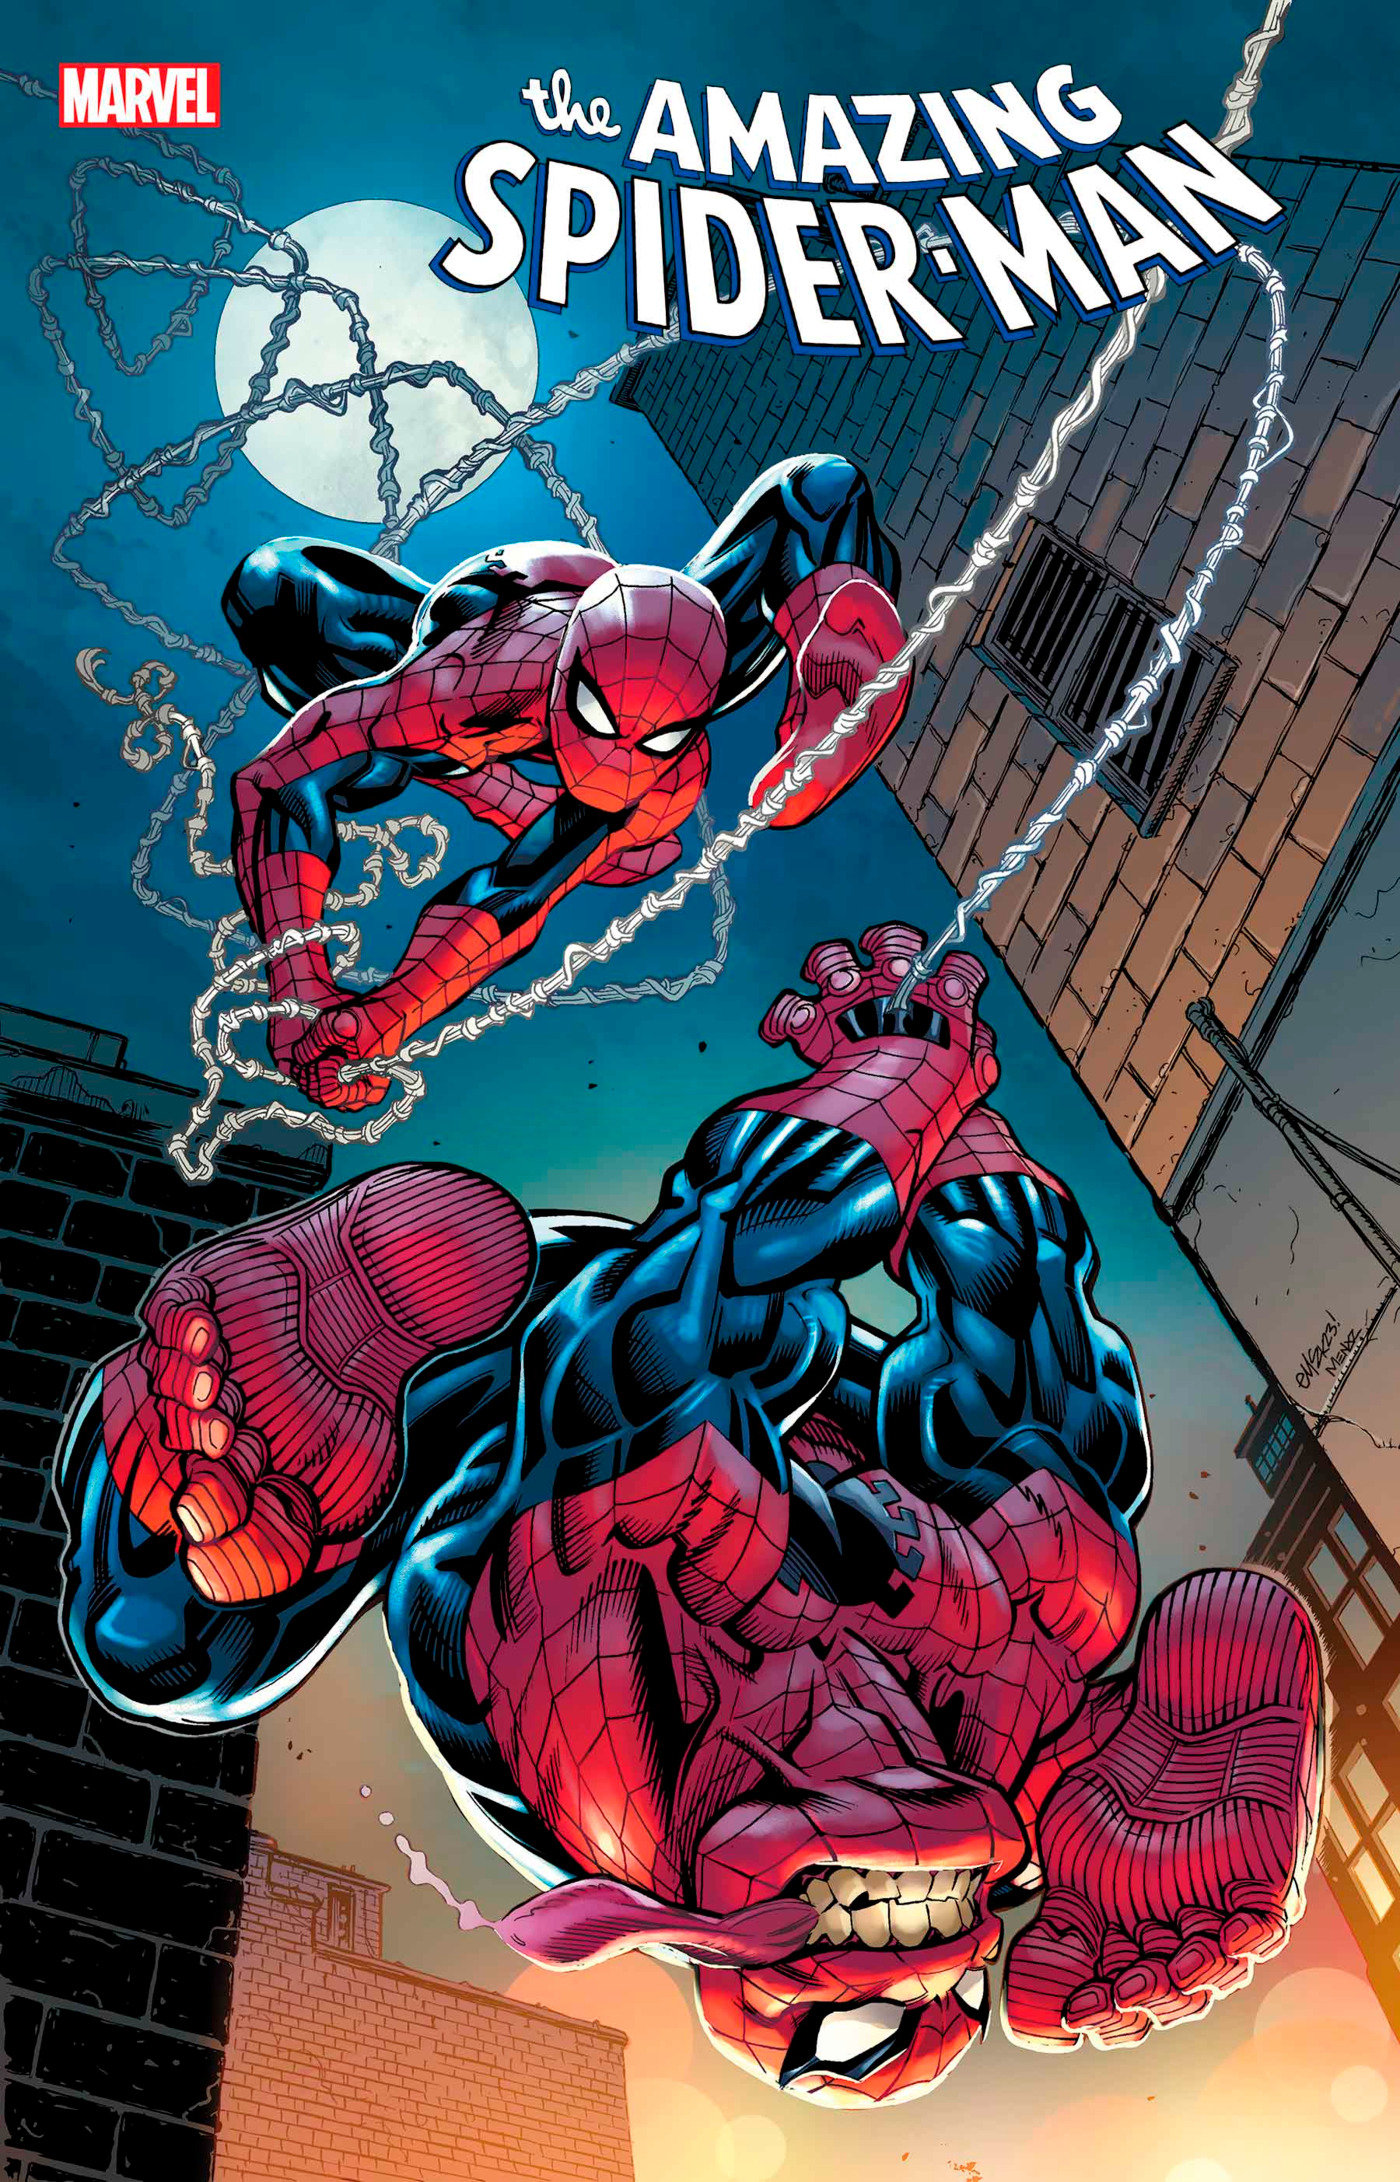 Amazing Spider-Man #37 (Gang War)